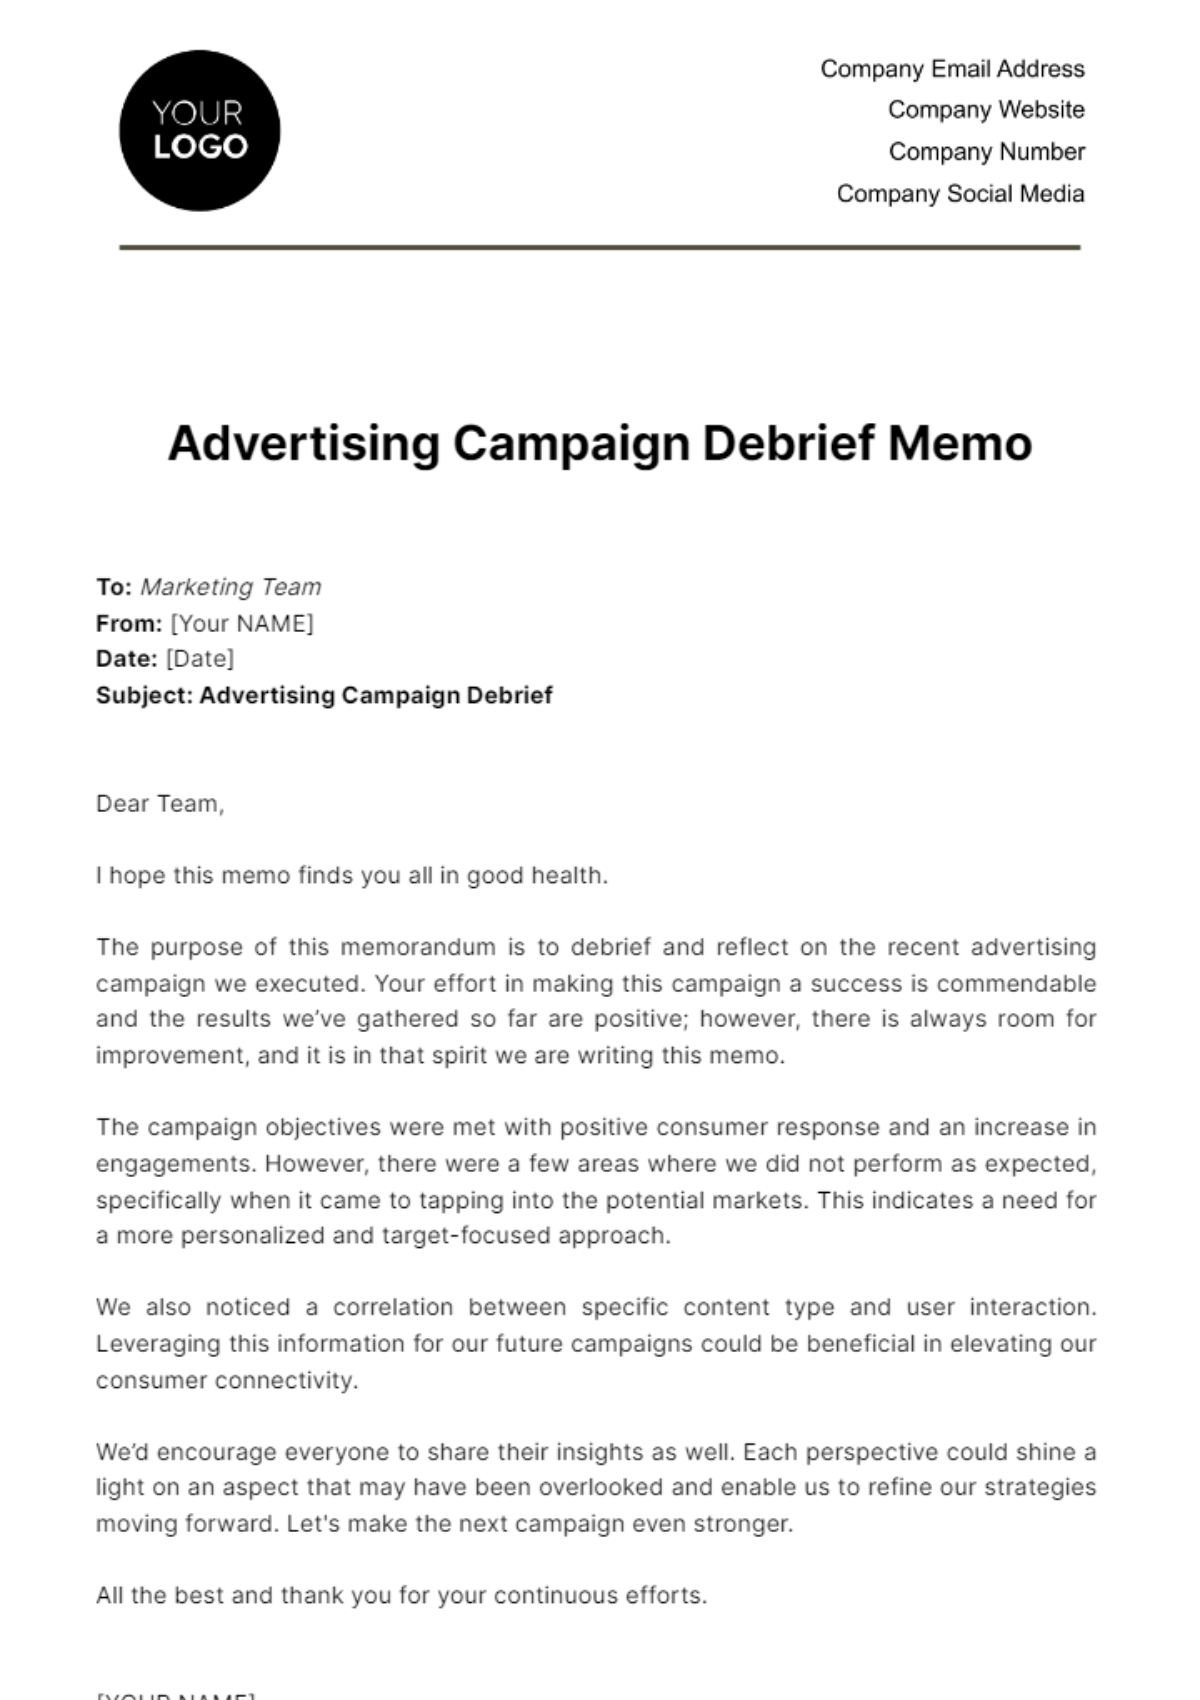 Advertising Campaign Debrief Memo Template